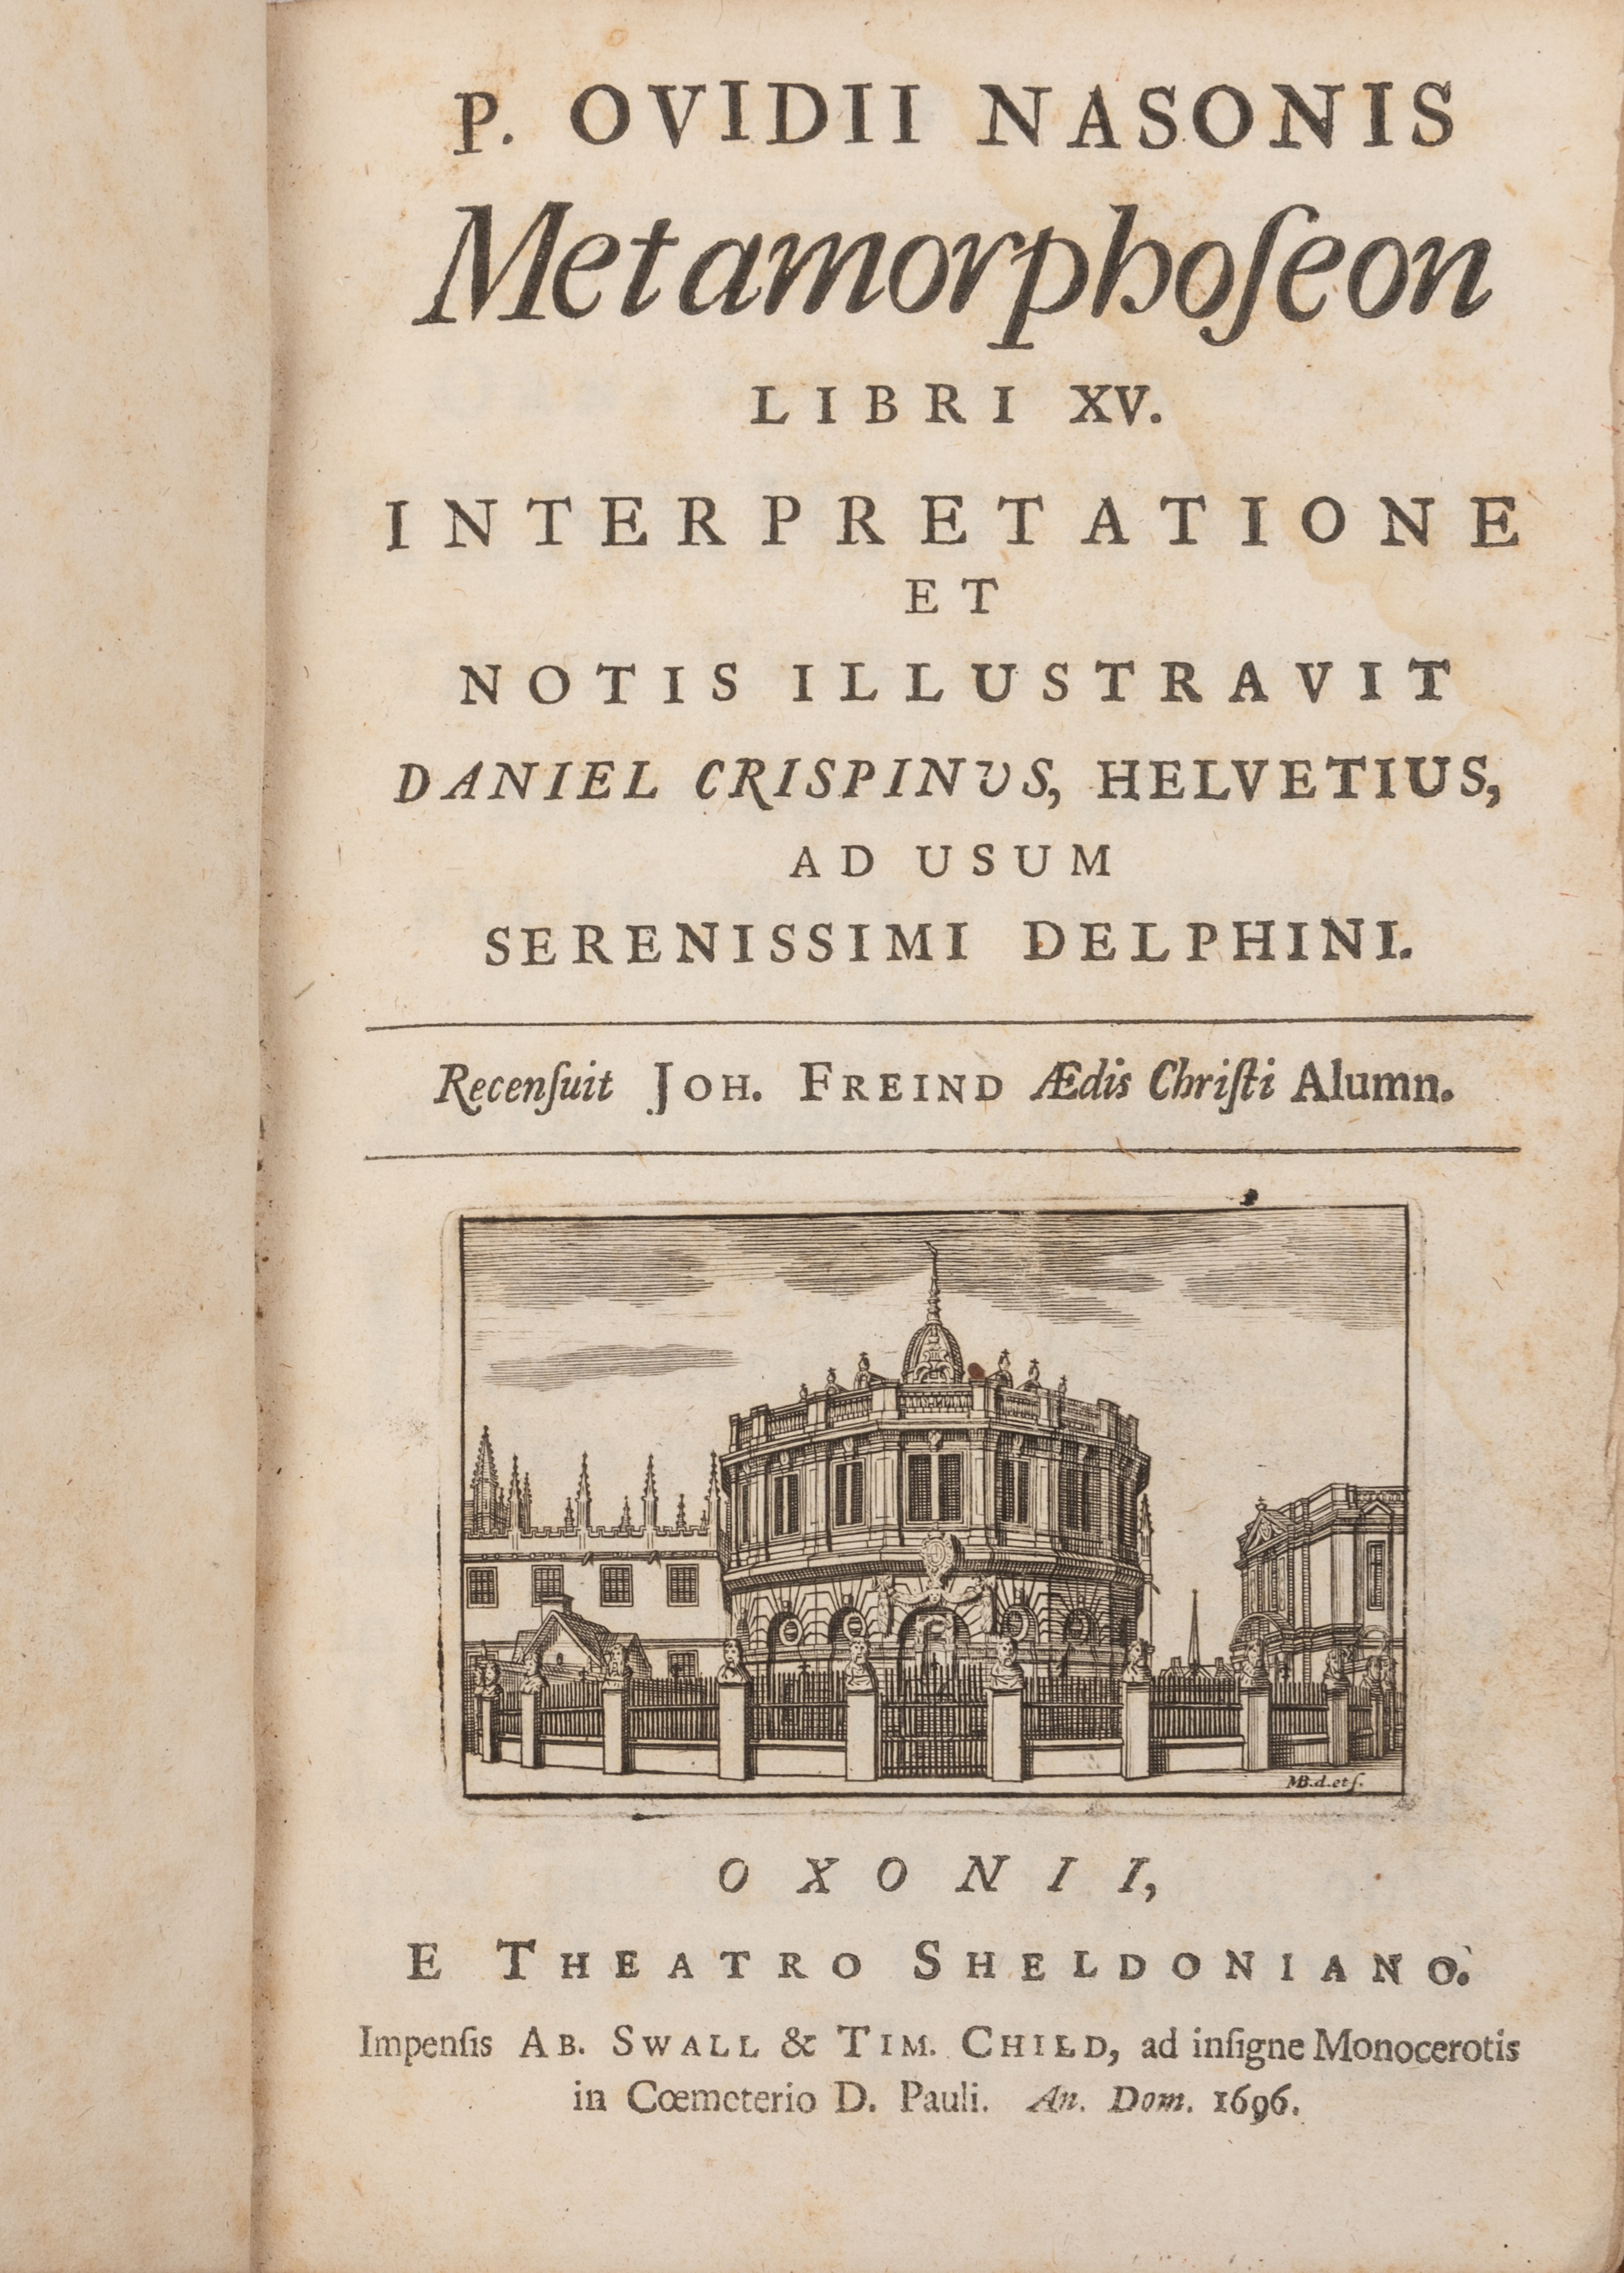 P Ovidii Nasonis. Metamophoseon. Libri XV,,, recensuit Joh. Freind. Sheldonian Theatre, Oxford. - Image 2 of 2